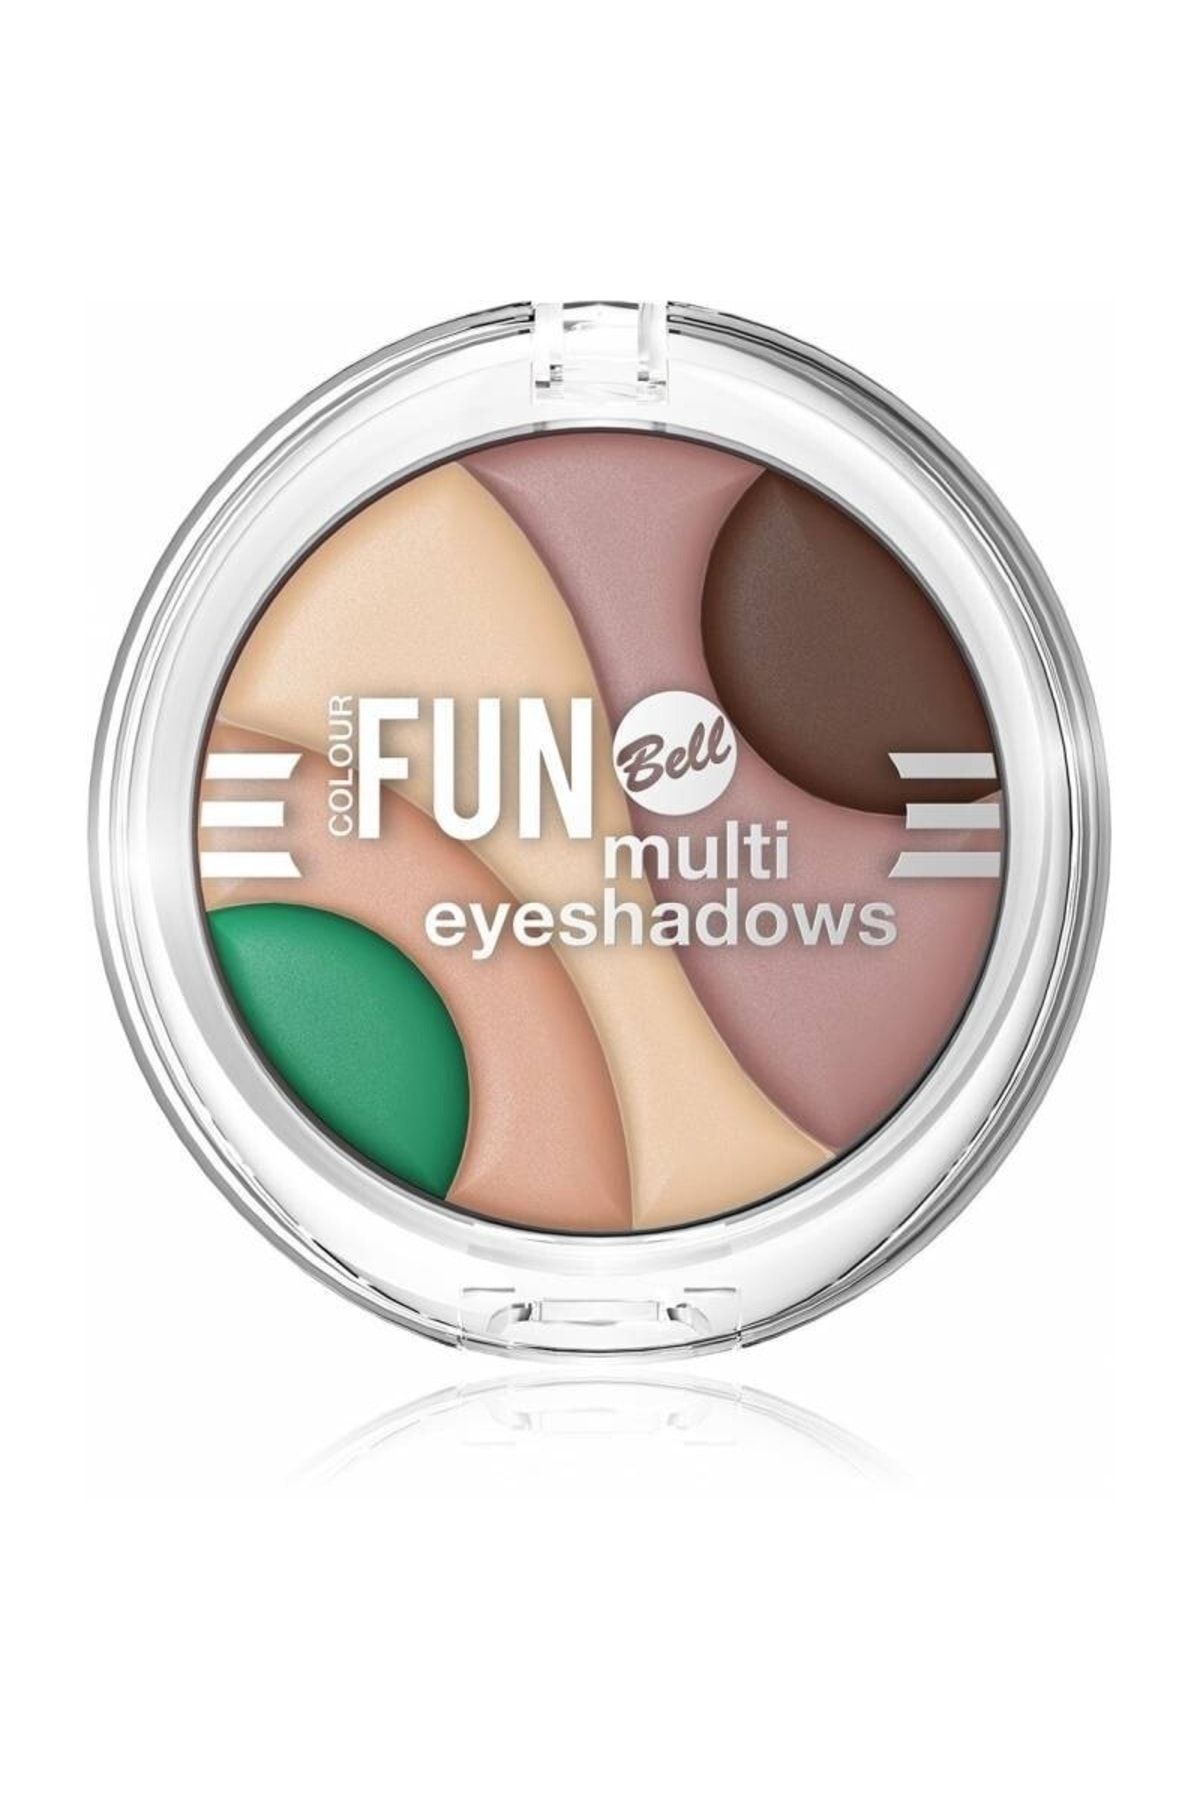 Bell Colour Fun Multi Eyeshadows 02